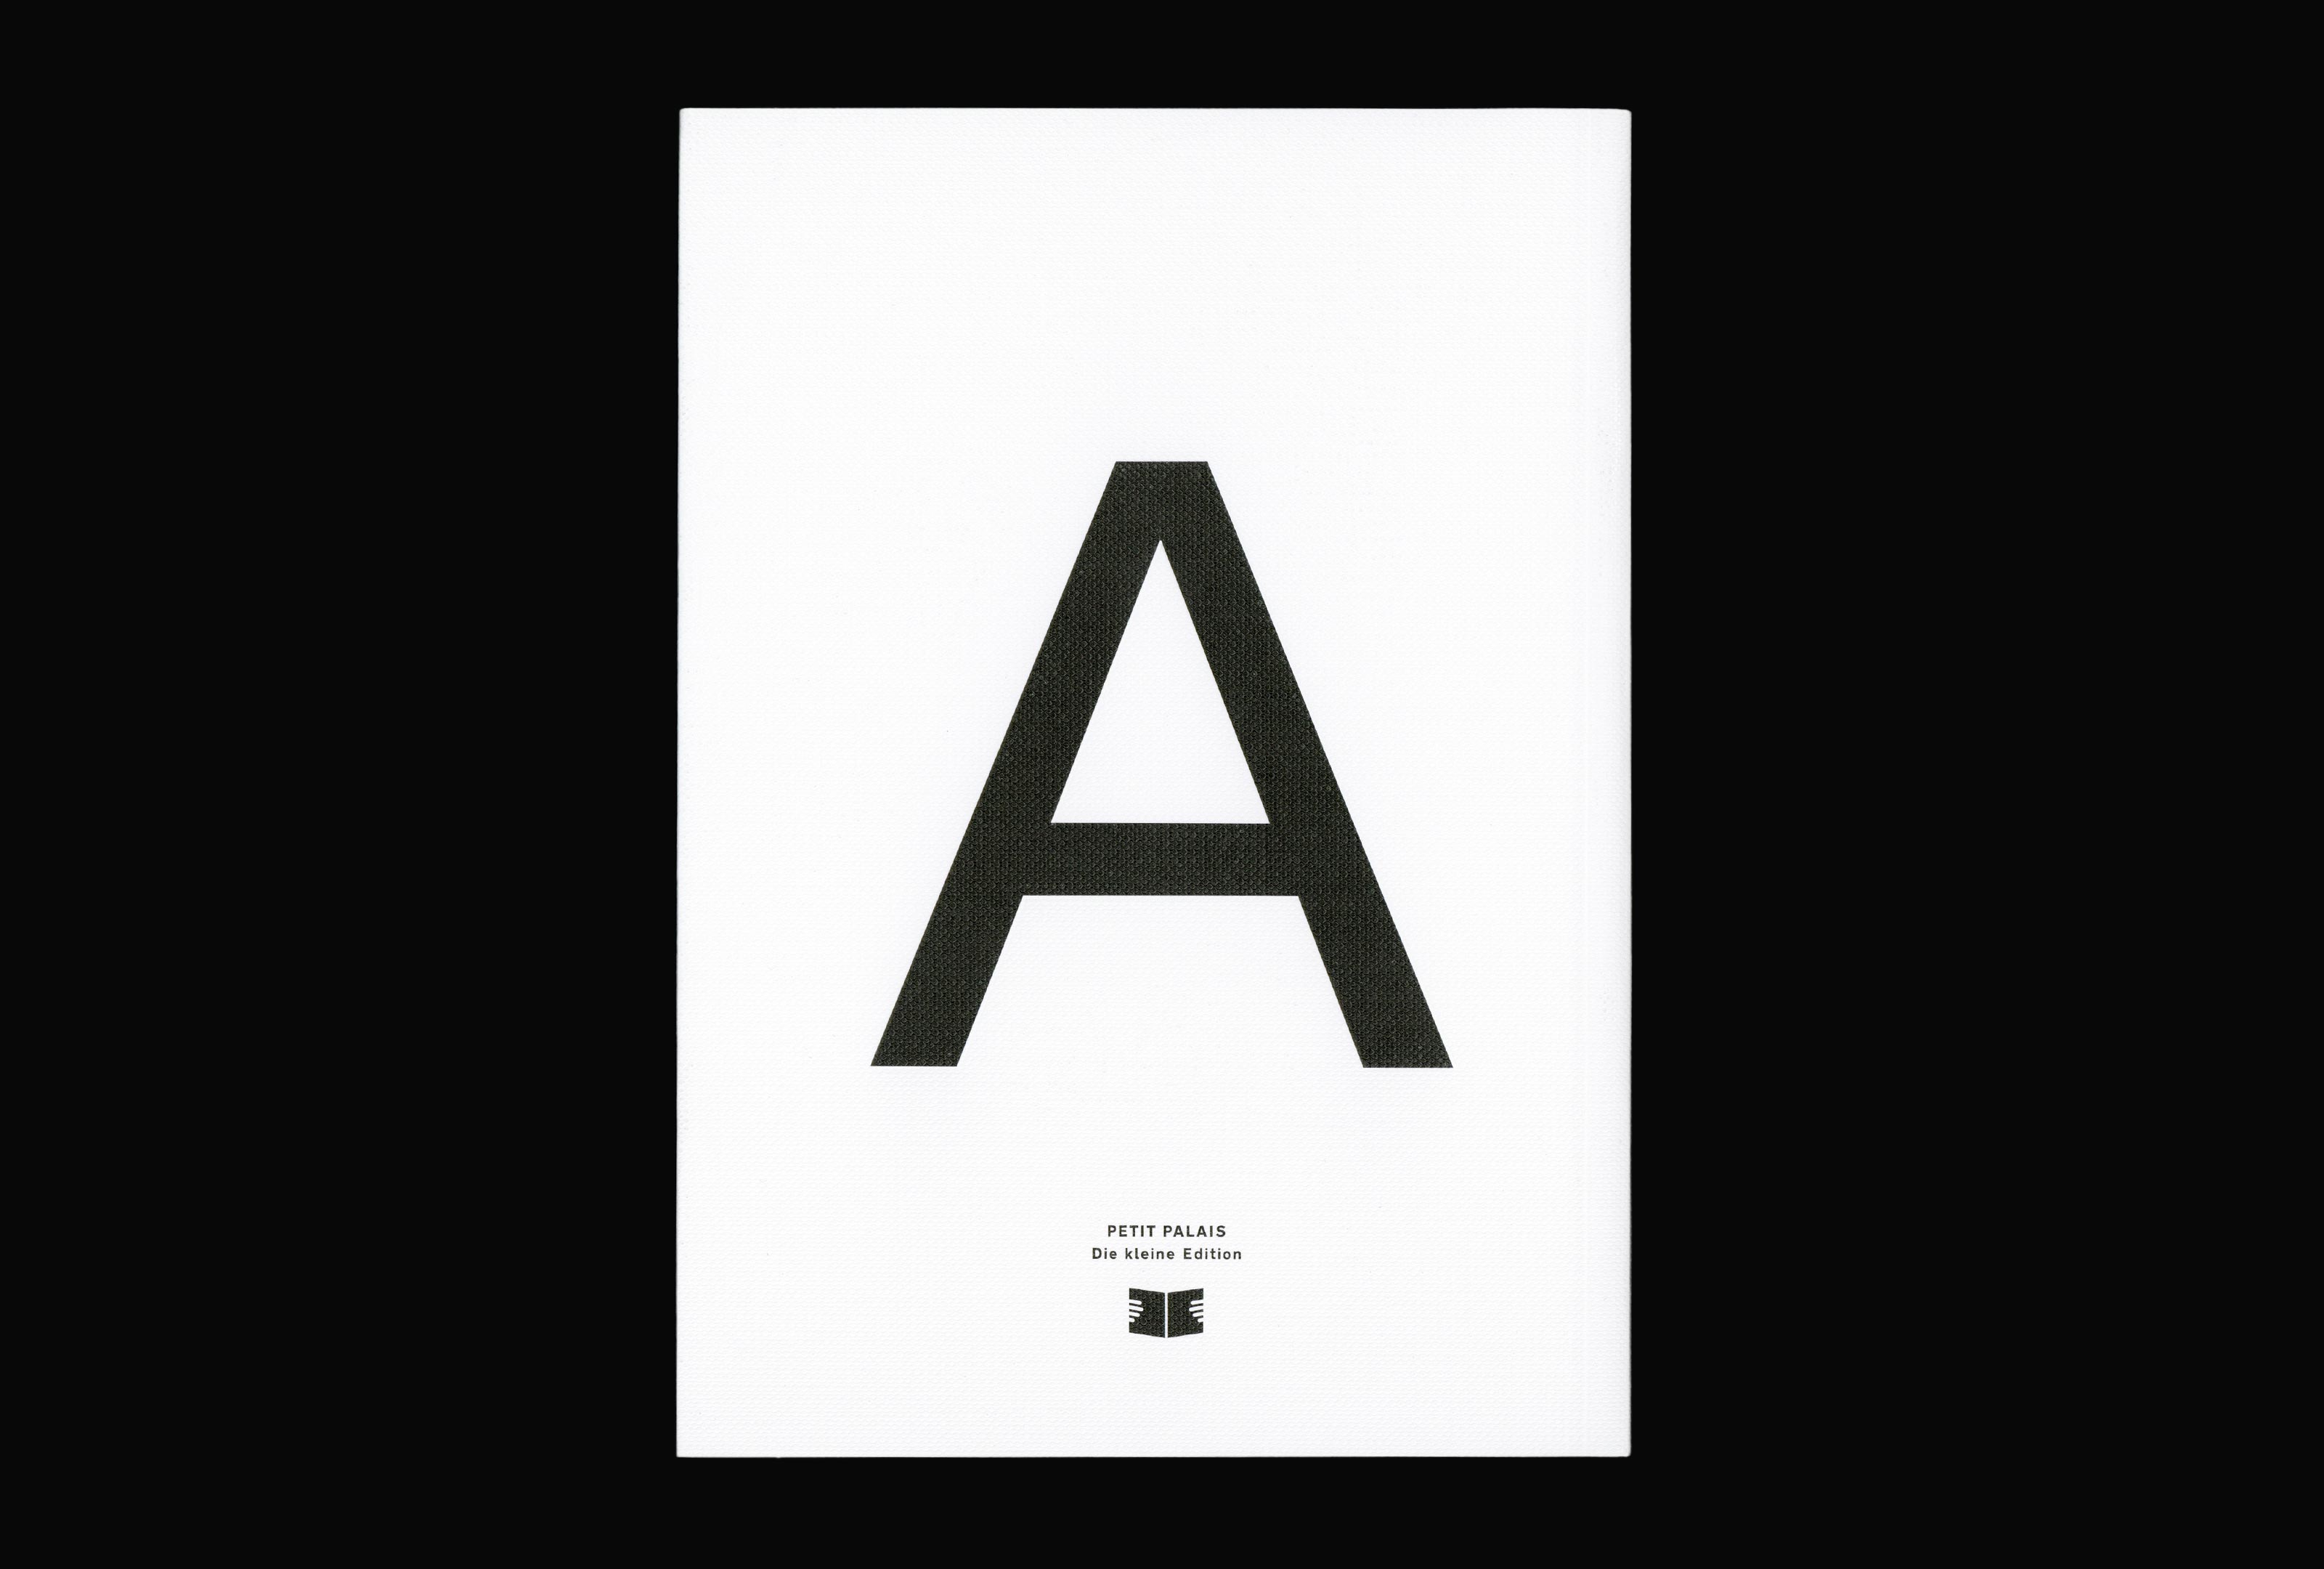 Atelier Pol, Grand Palais, Off Space, ABC, kultur, index, publication, editorial design, bern, switzerland, black and white